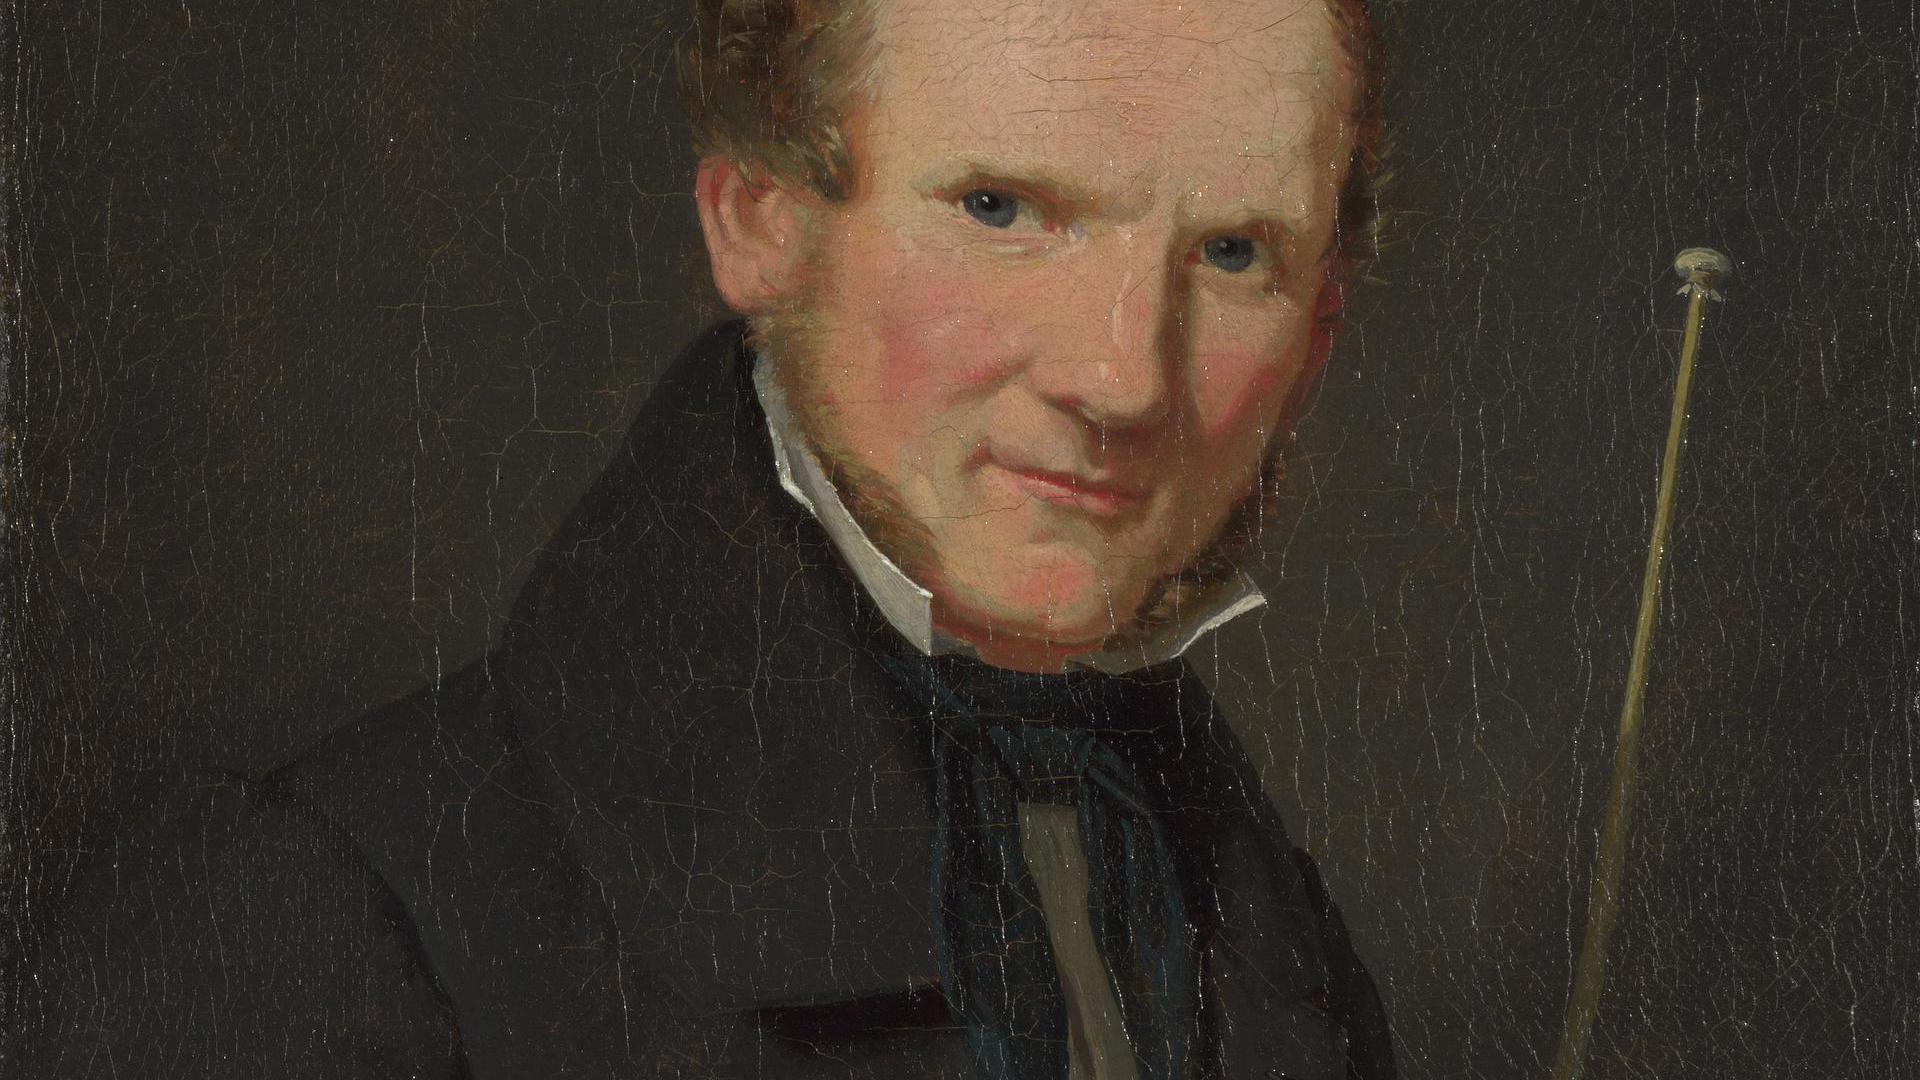 Portrait of Wilhelm Bendz by Christen Købke